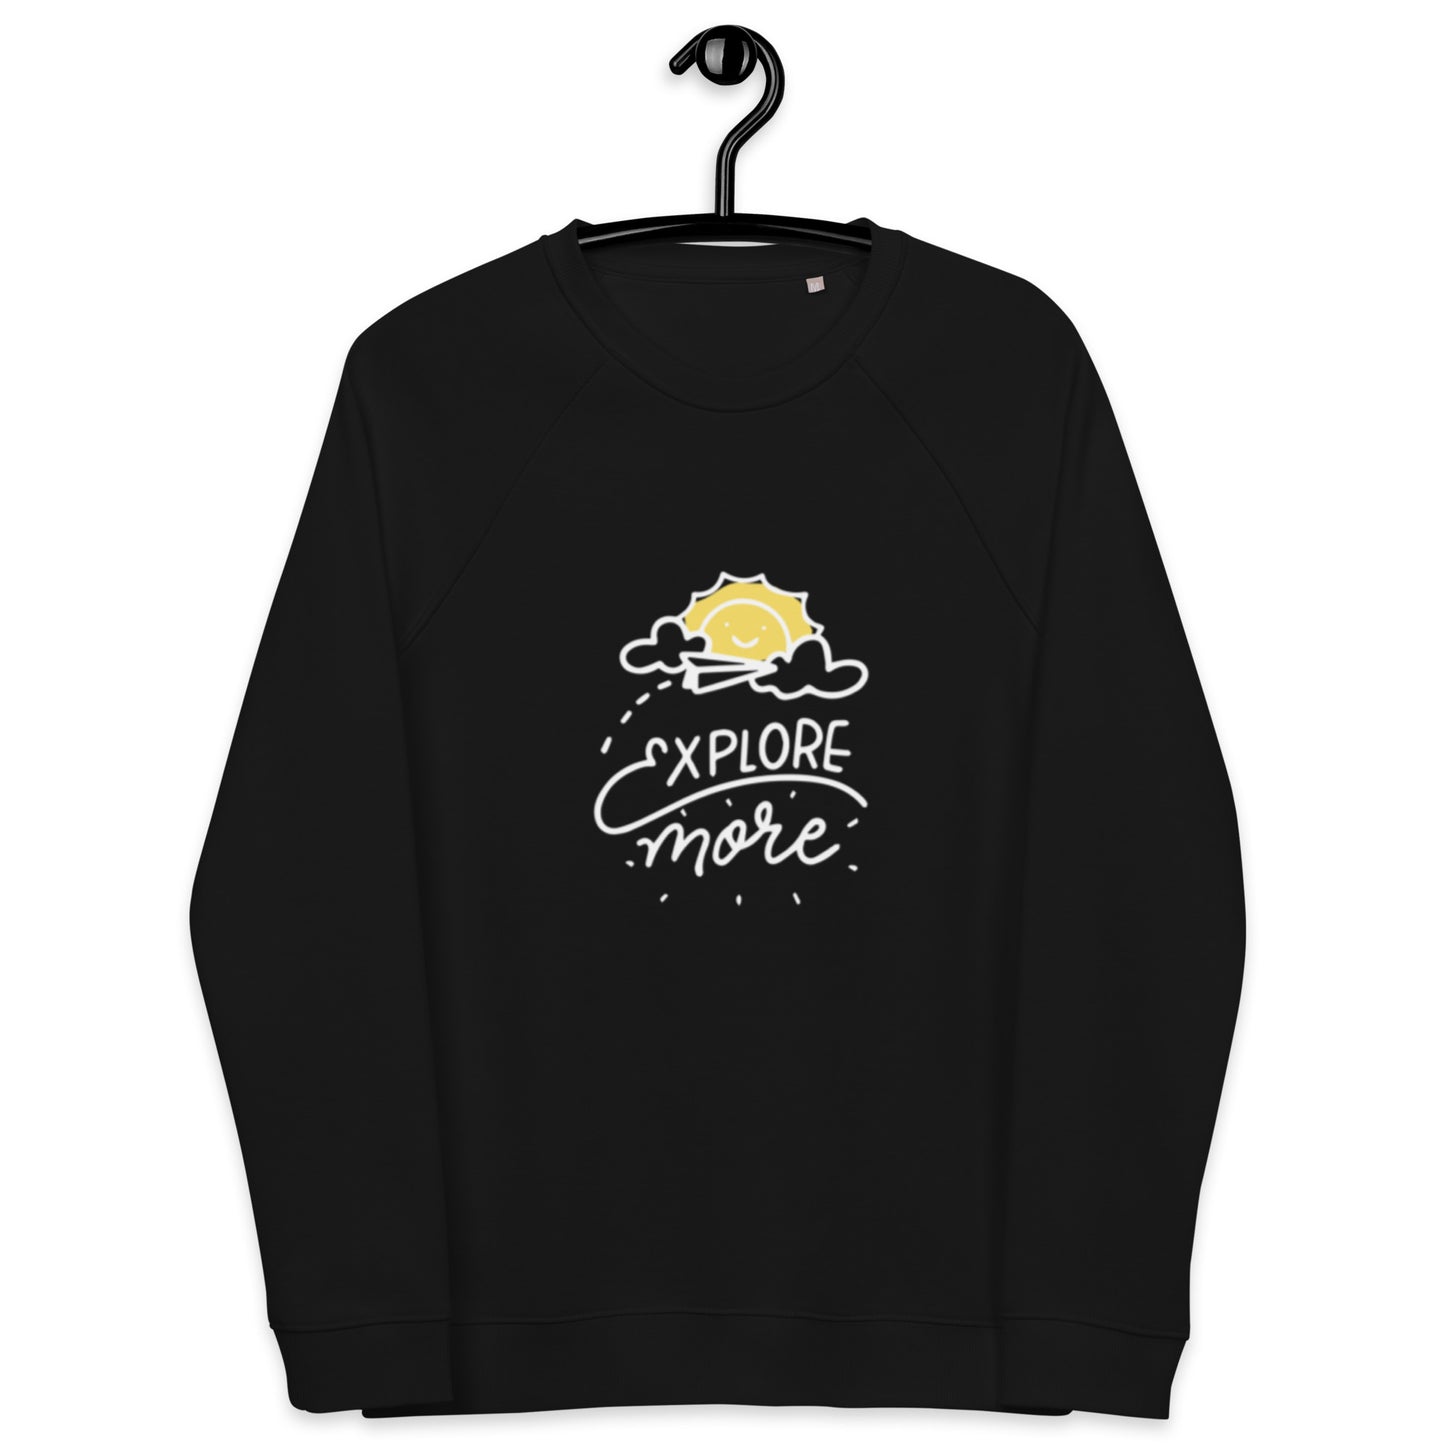 Explore more - Unisex organic raglan sweatshirt - HobbyMeFree